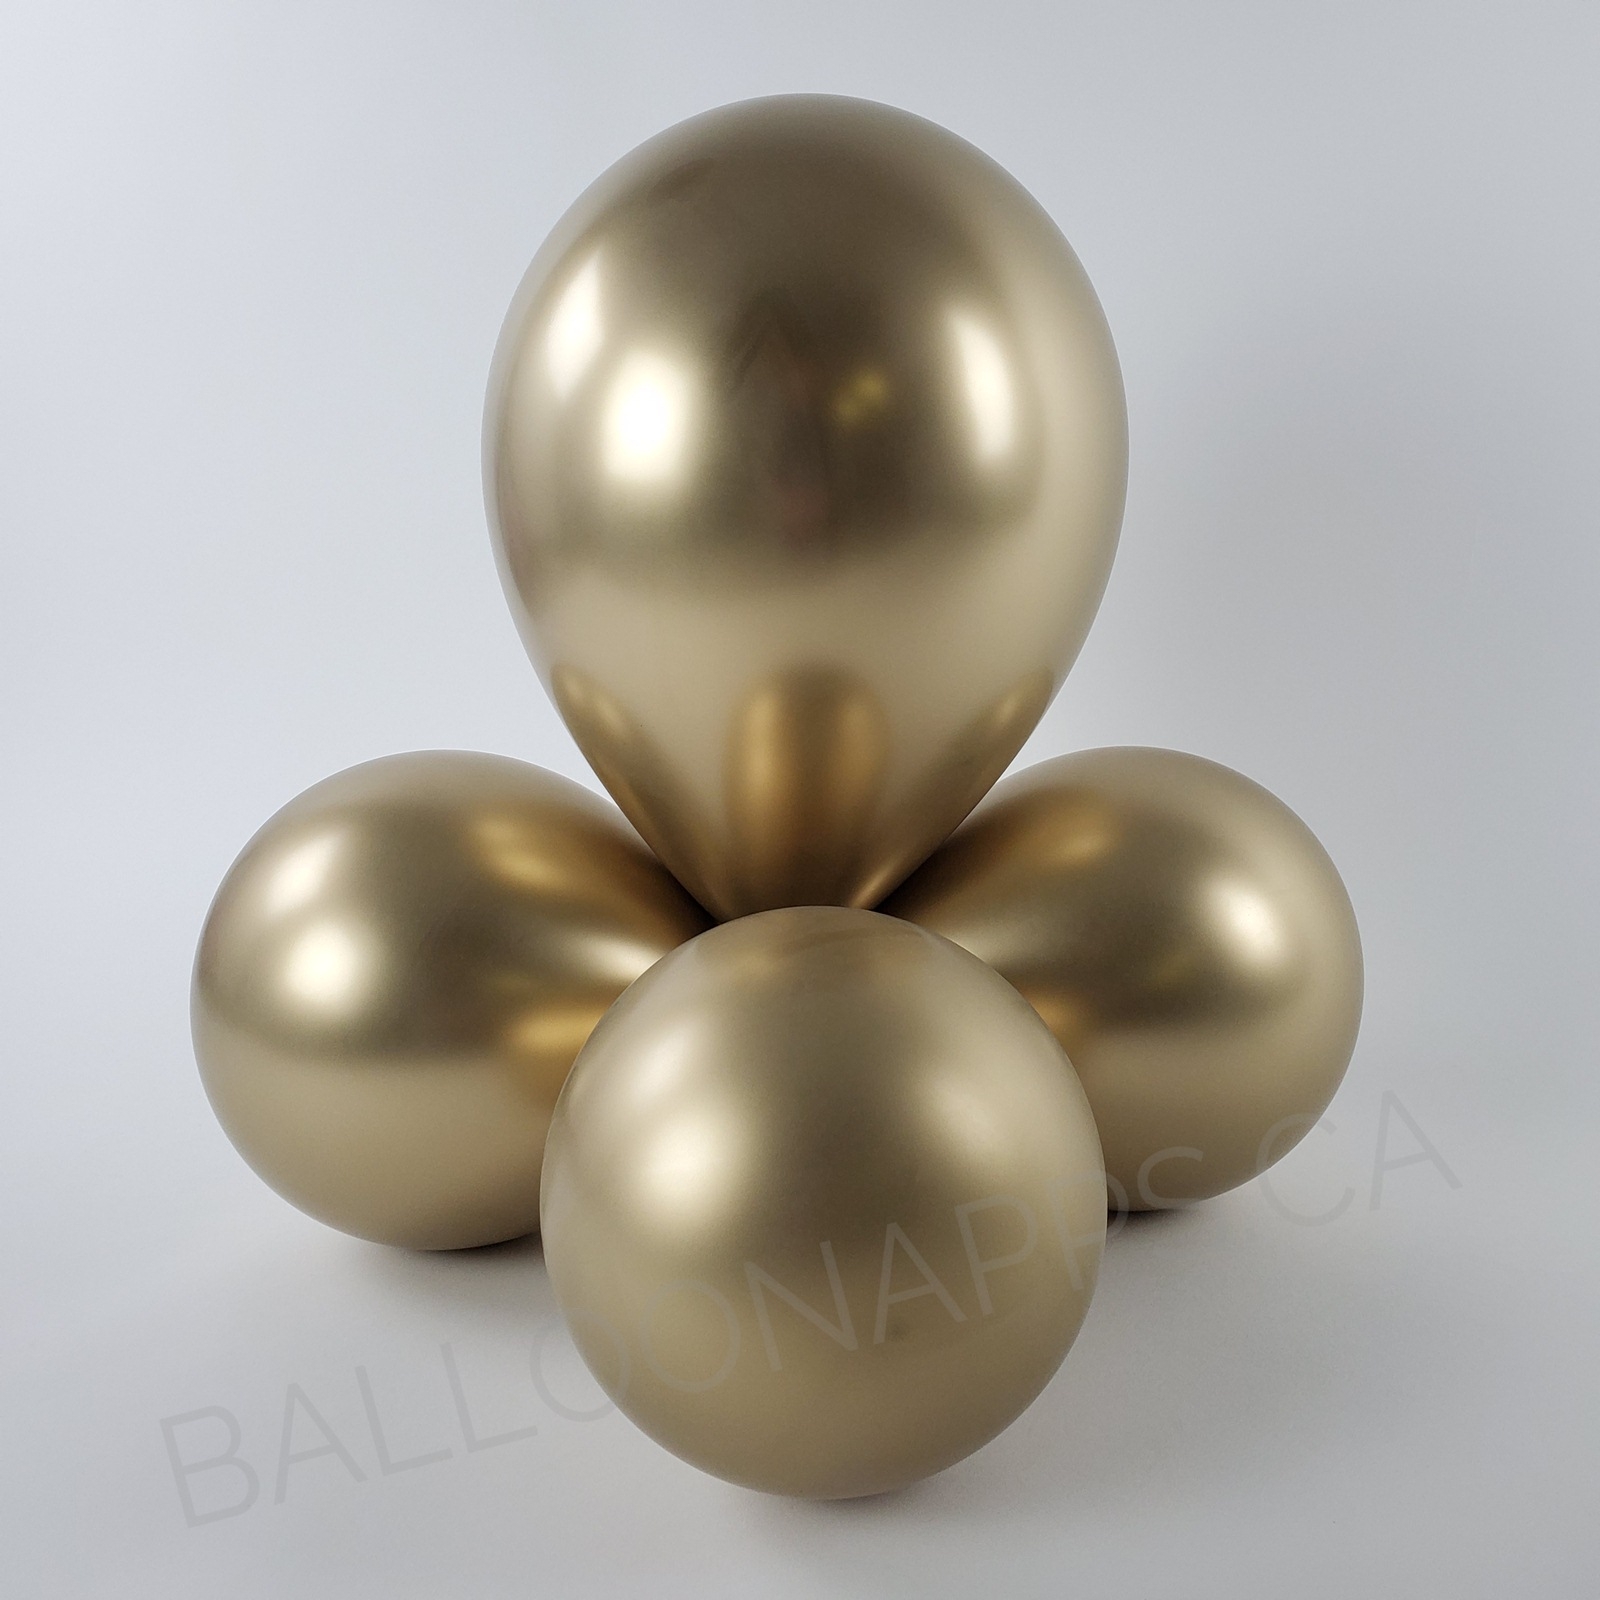 balloon texture NOVA (50) 11